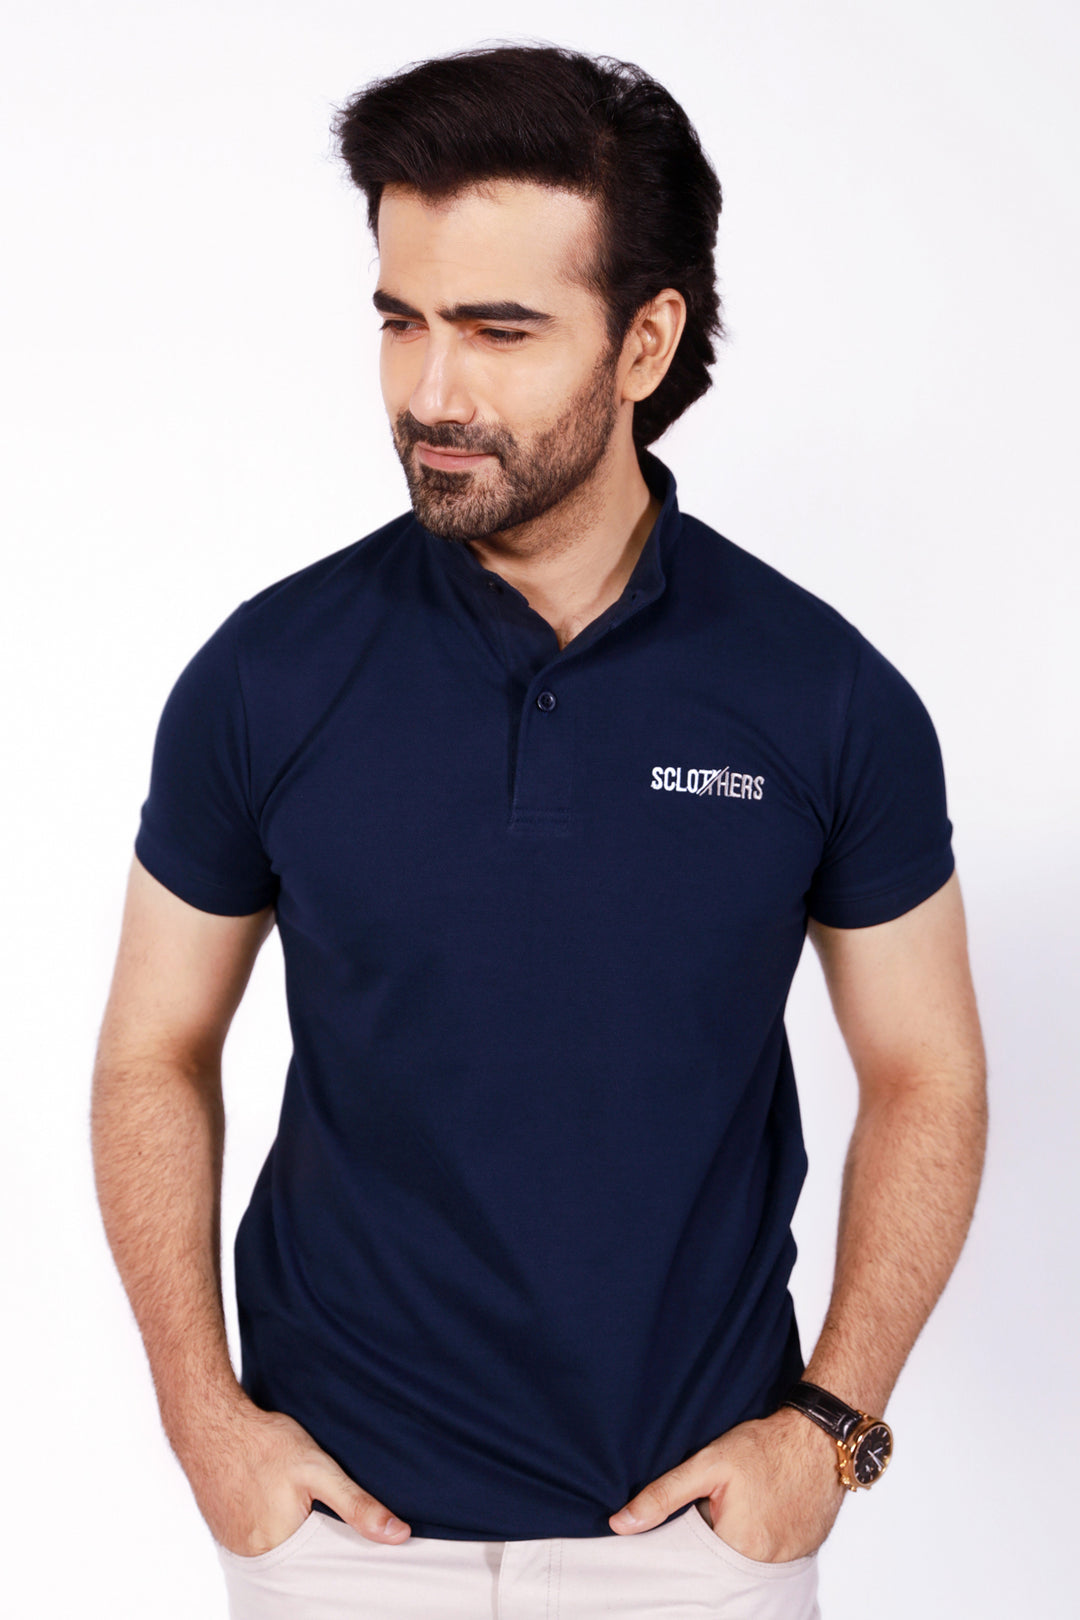 Band Collar Polo Shirt Online Pakistan